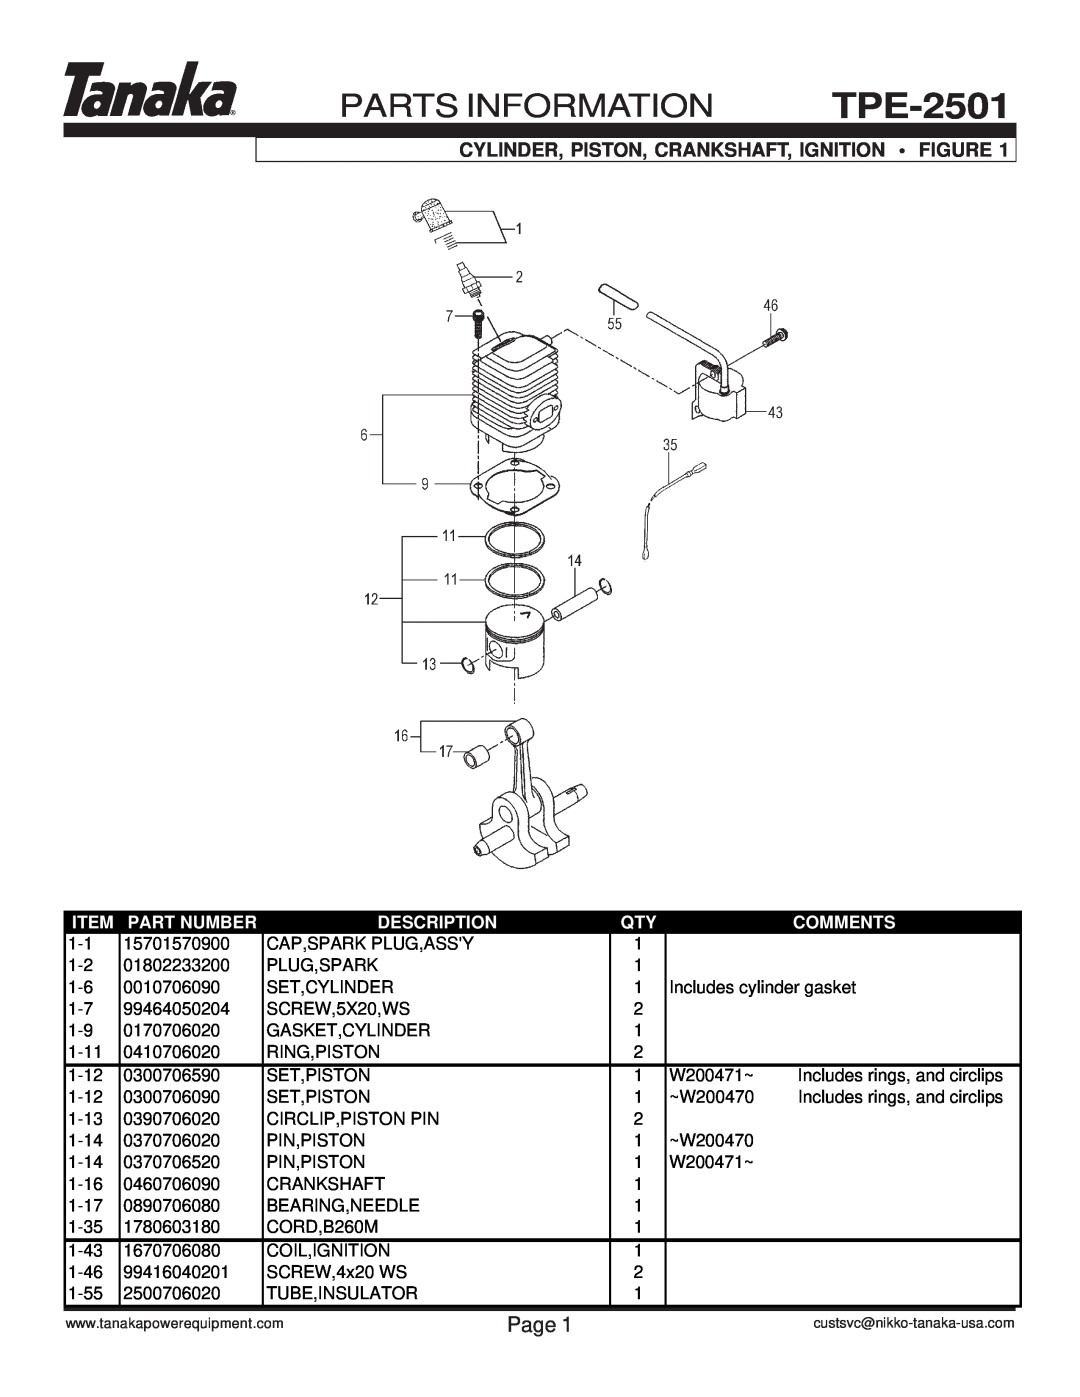 Tanaka TPE-2501 manual Parts Information, Cylinder, Piston, Crankshaft, Ignition • Figure, Page, Part Number, Description 